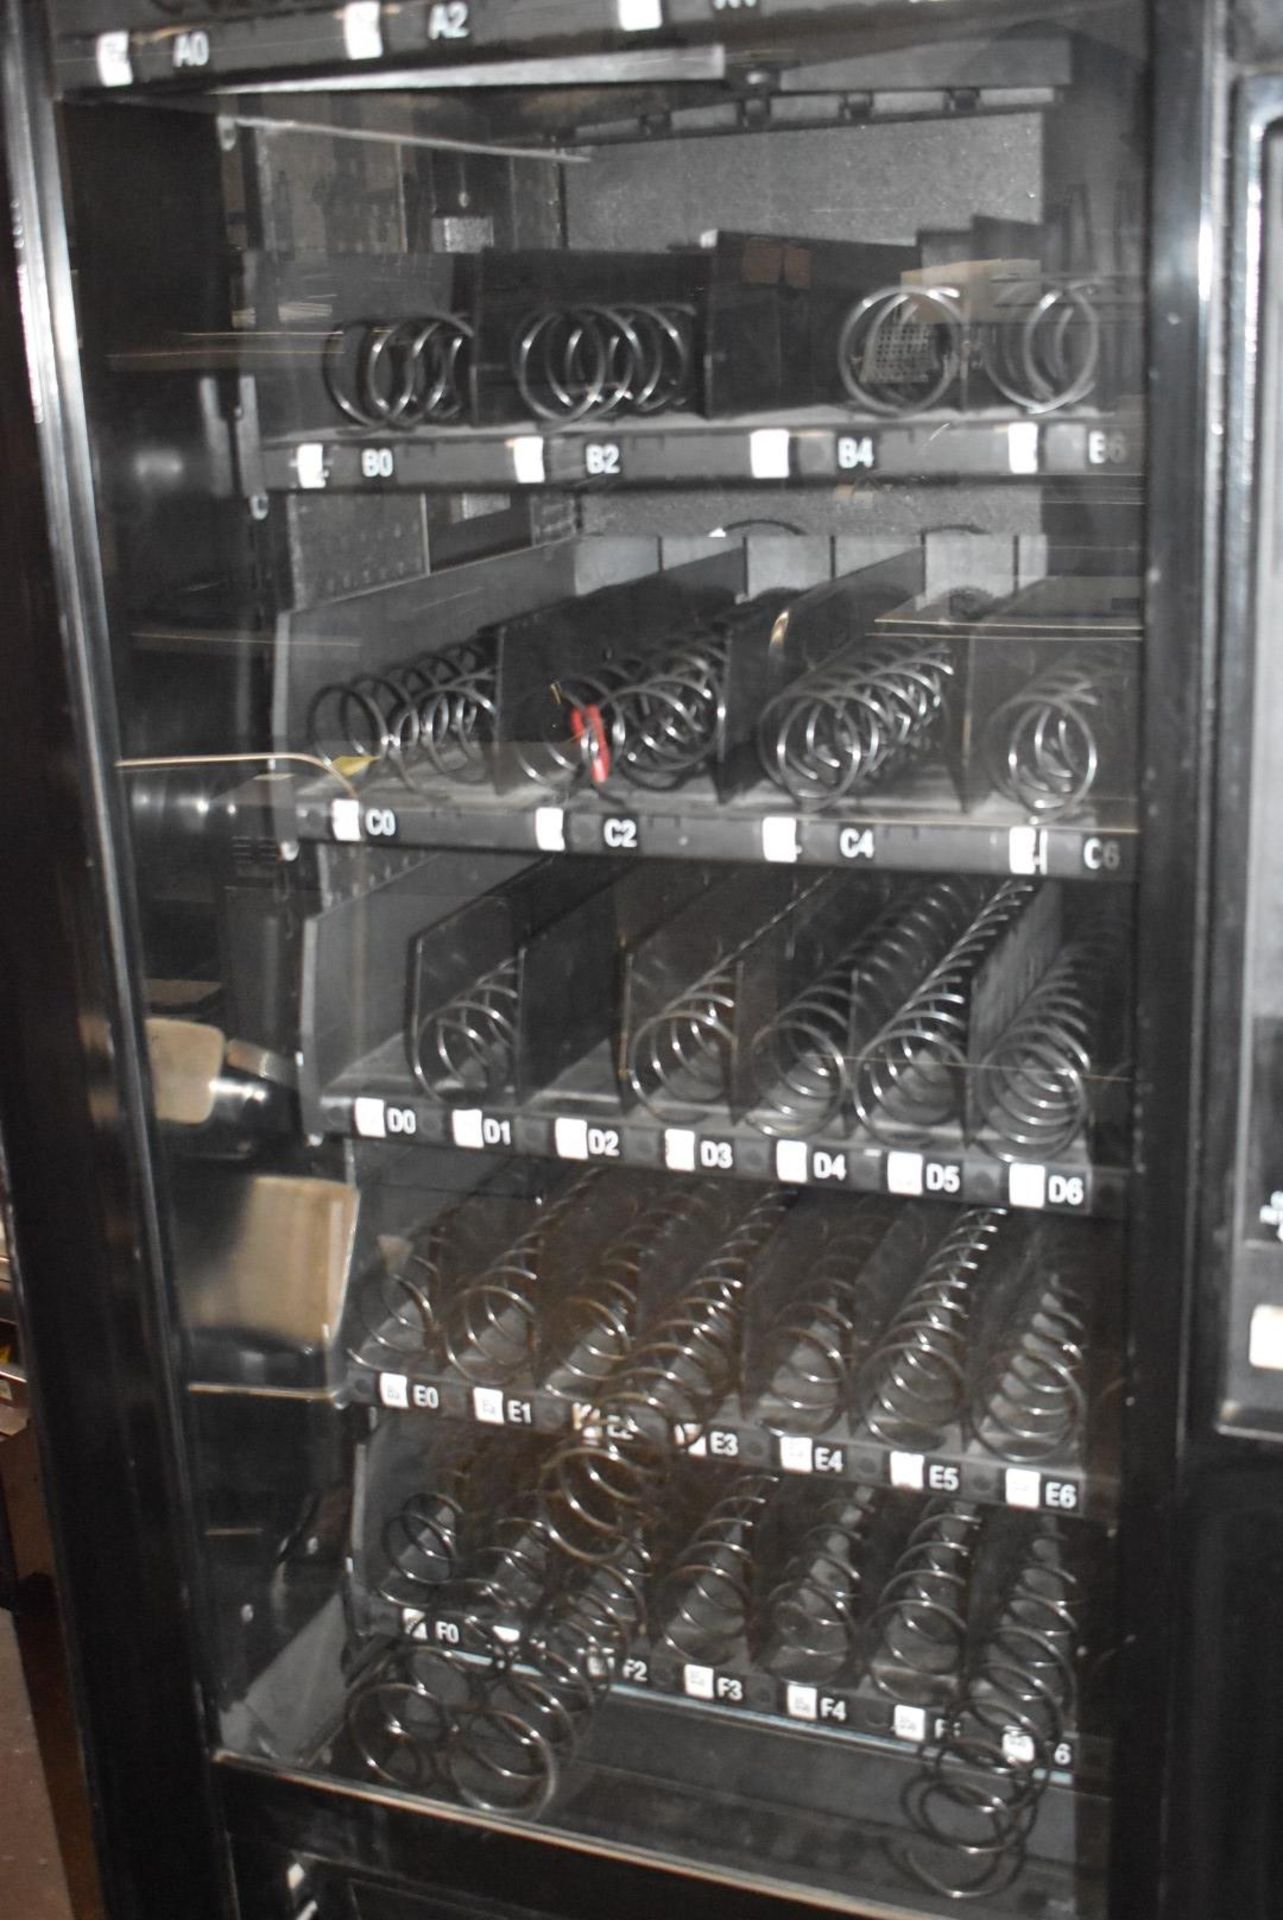 1 x Polyvend 453 Snack Food Vending Machine - H182 x W65 x D72 cms - Ref: GCA153 WH5 - CL011 - - Image 4 of 12